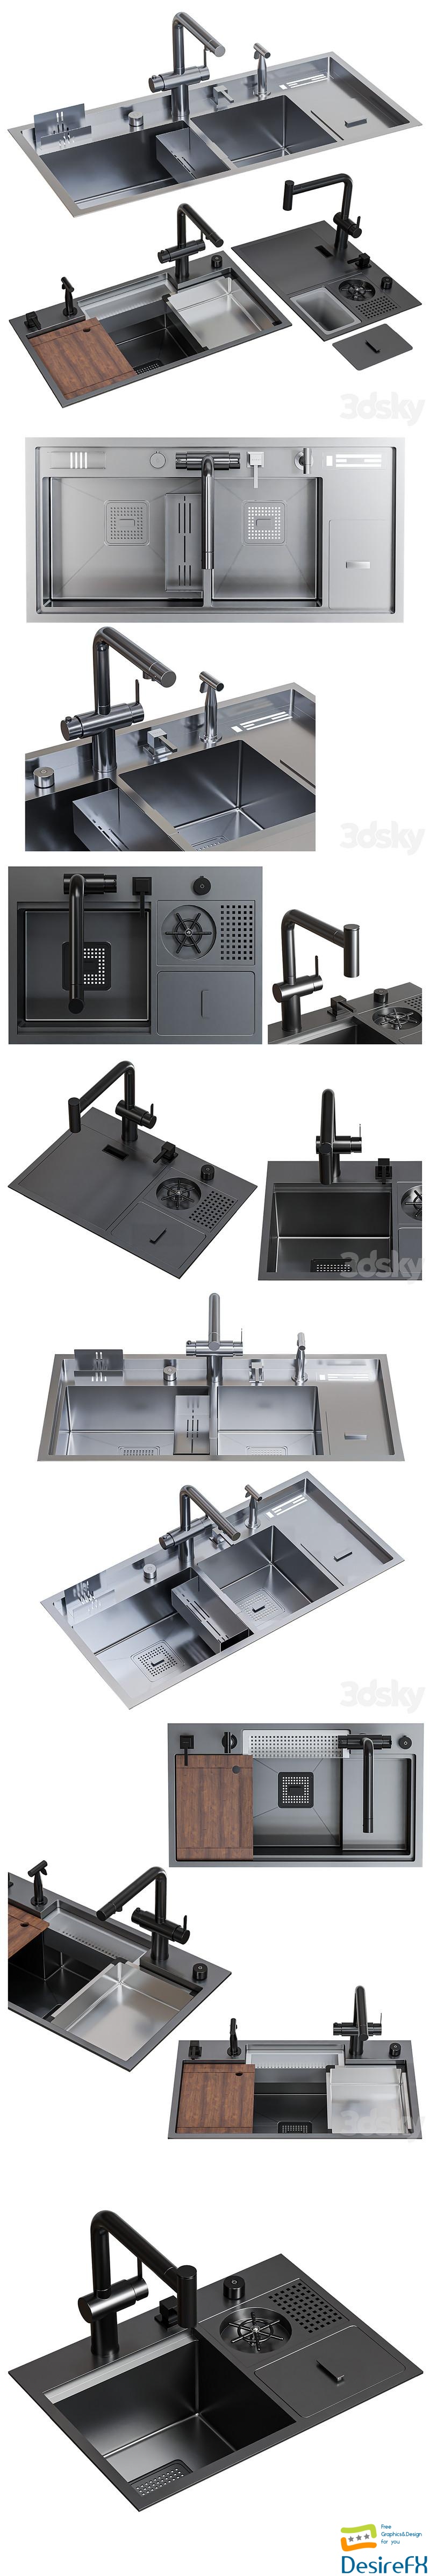 Asras sink set2 3D Model